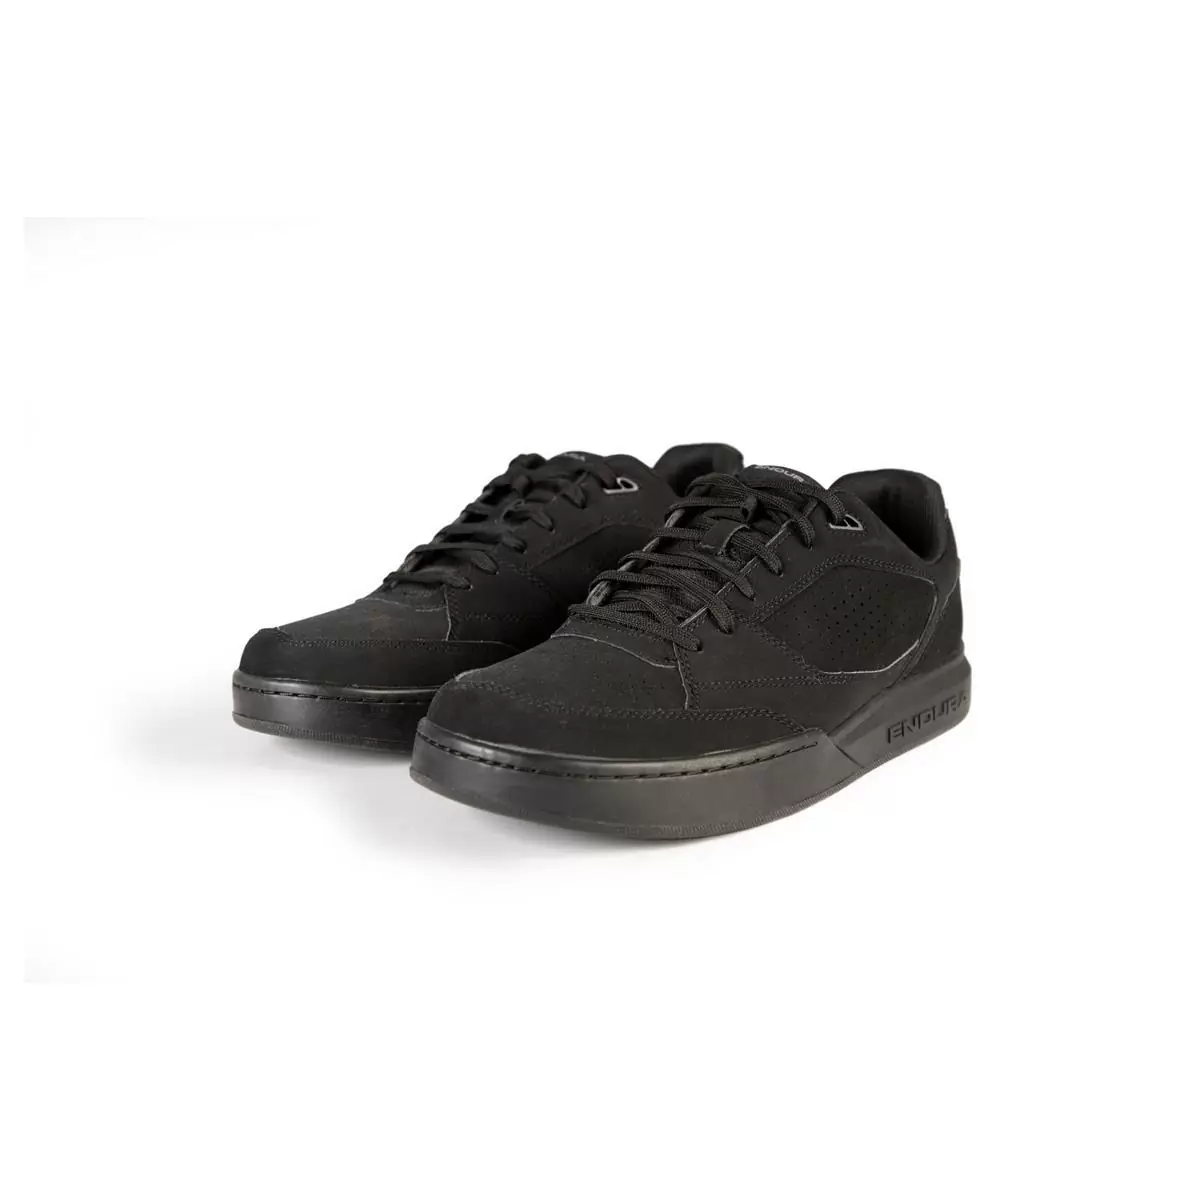 Hummvee Flat Pedal Shoes Black Size 39 - image